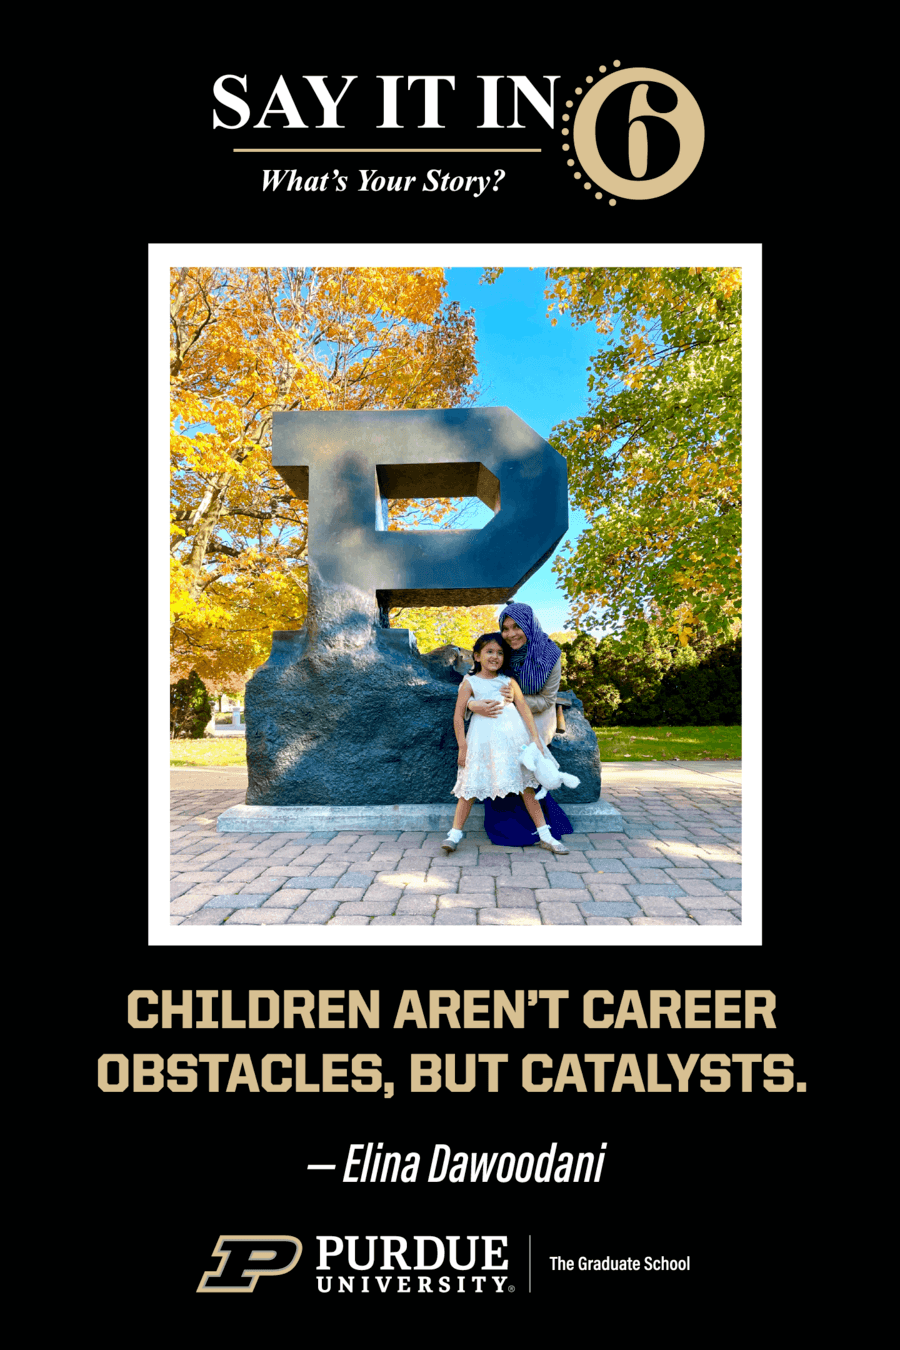 "Children aren't career obstacles, but catalysts." - Elina Dawoodani